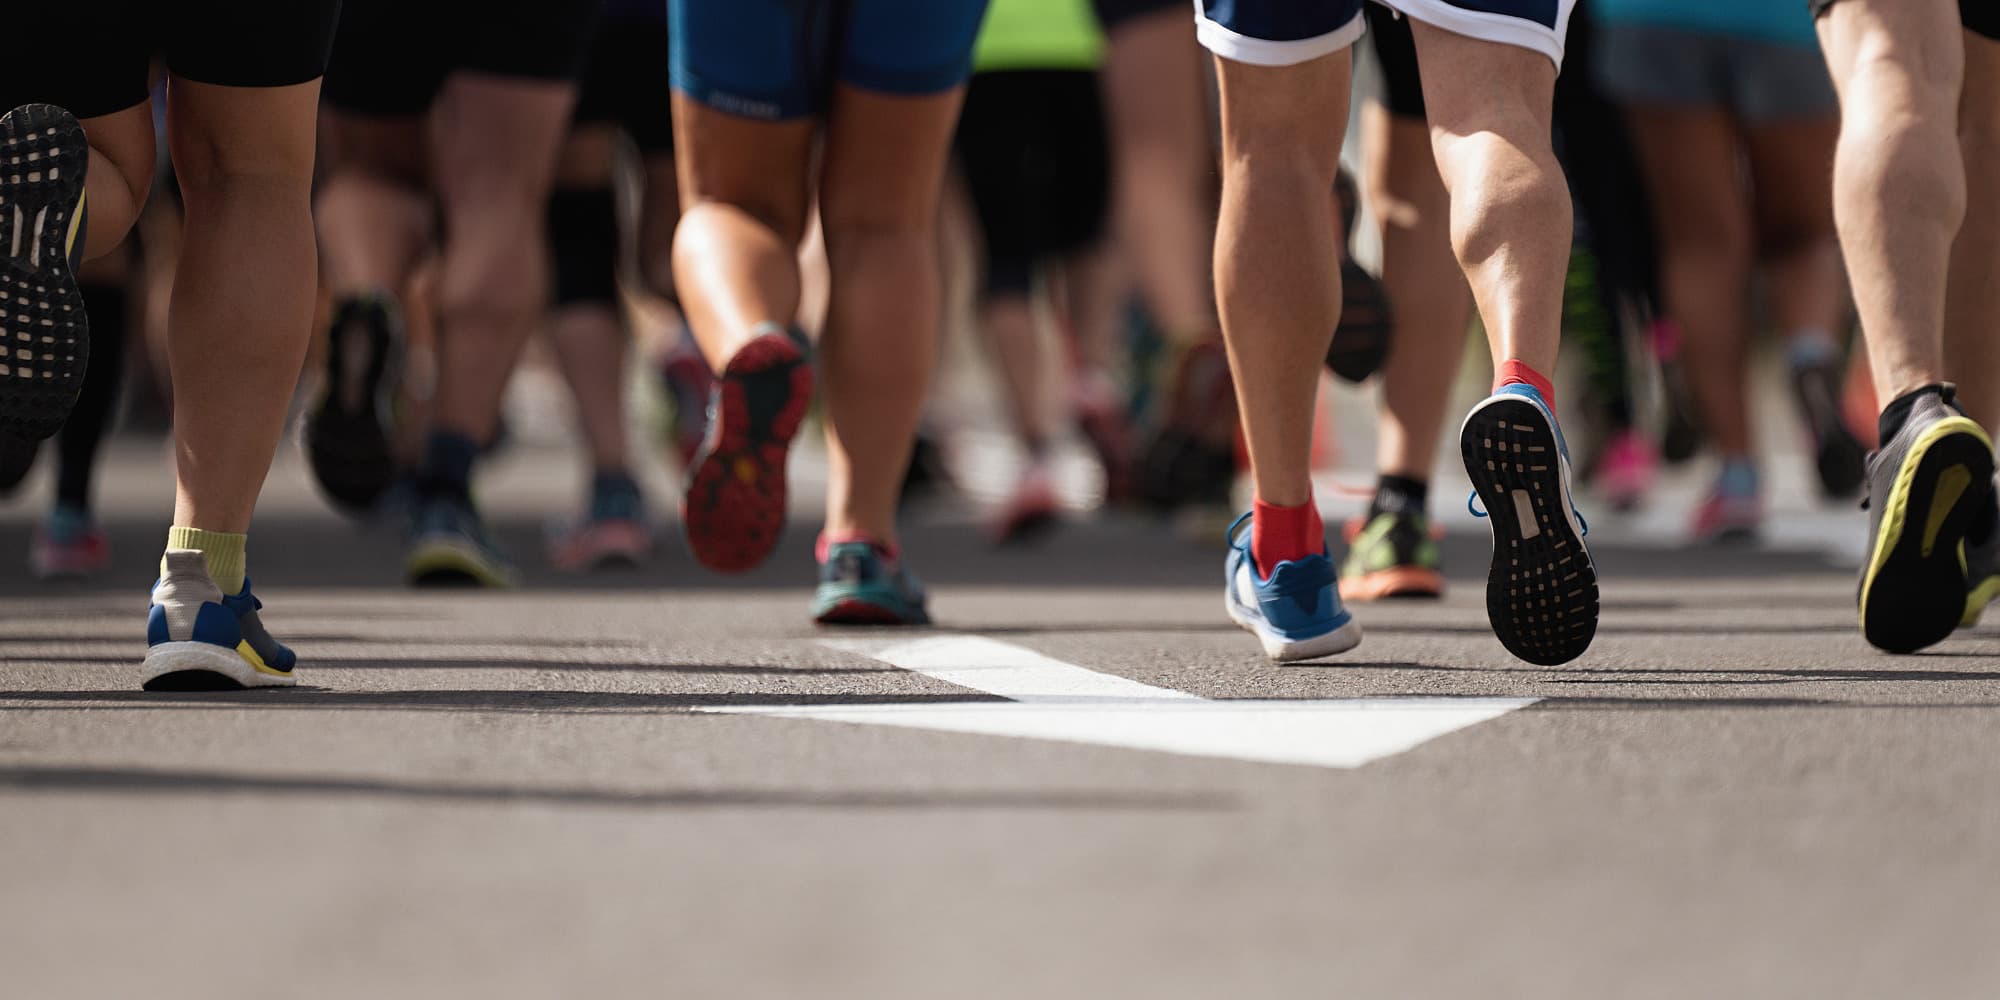 Dozens of legs pound the pavement during a fun run